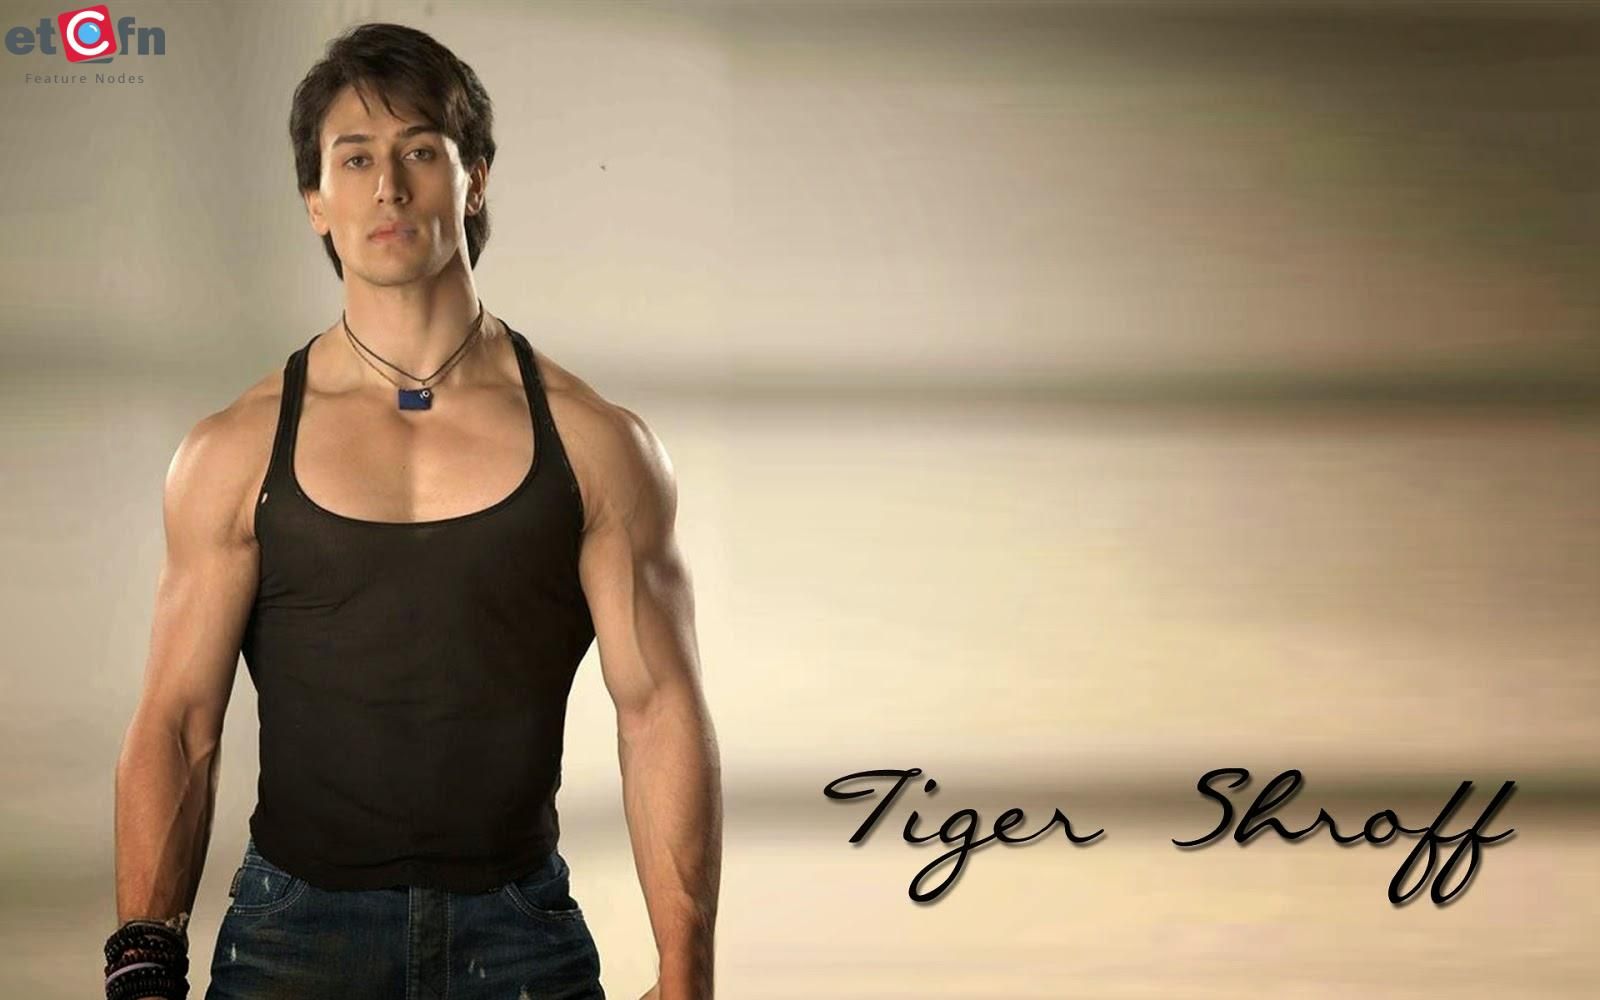 Tiger Shroff HD Wallpaper And Biography- etcfn.com. Tiger shroff, Bollywood actors, Basic tank top